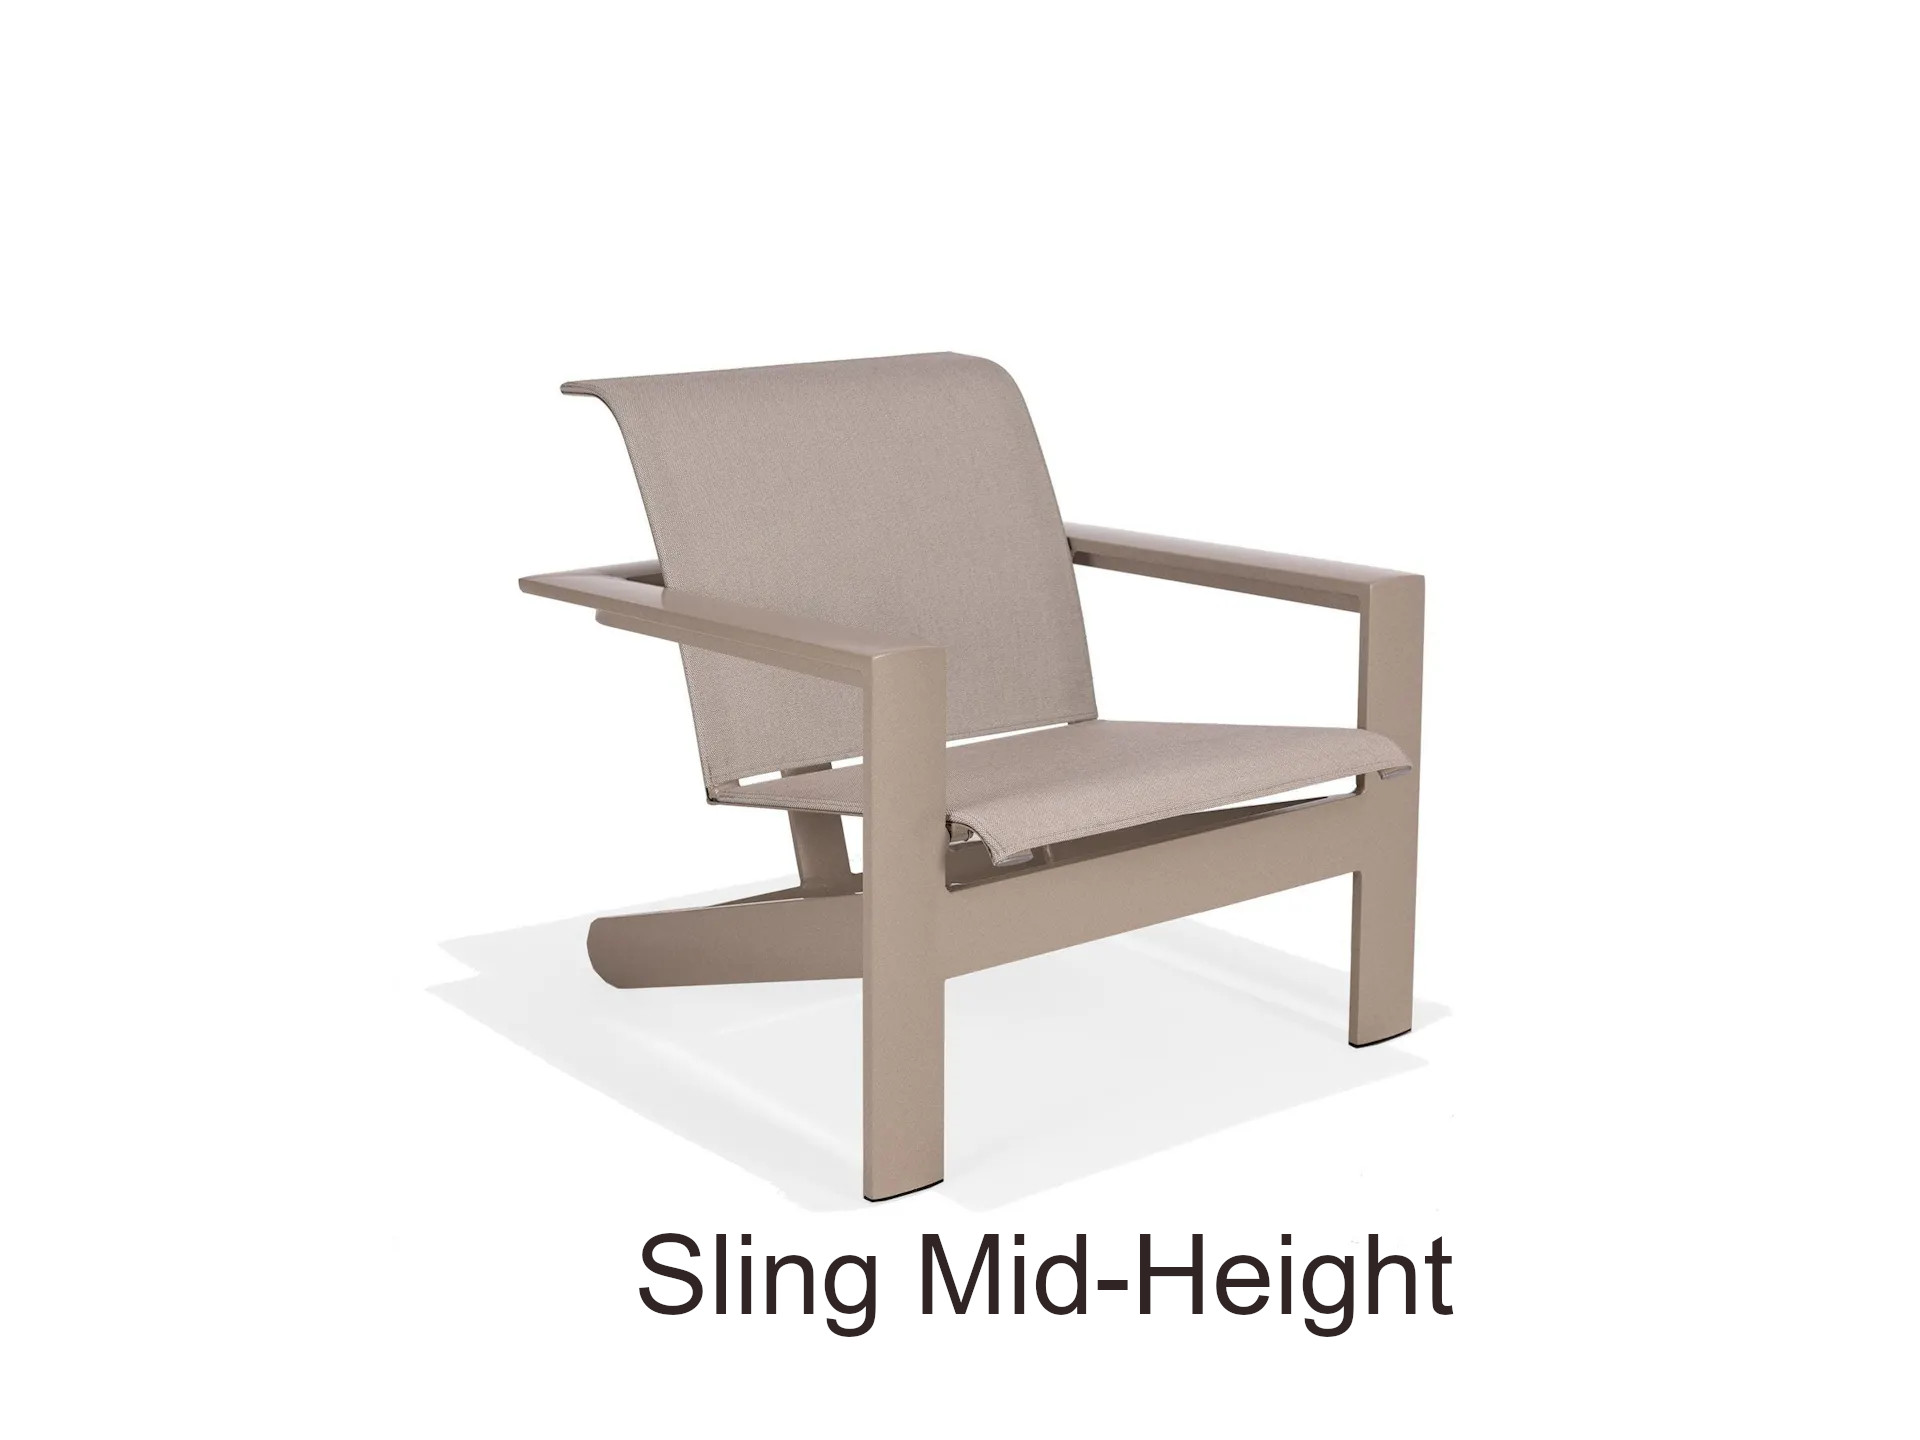 Sling Mid-Height Adirondack Chair